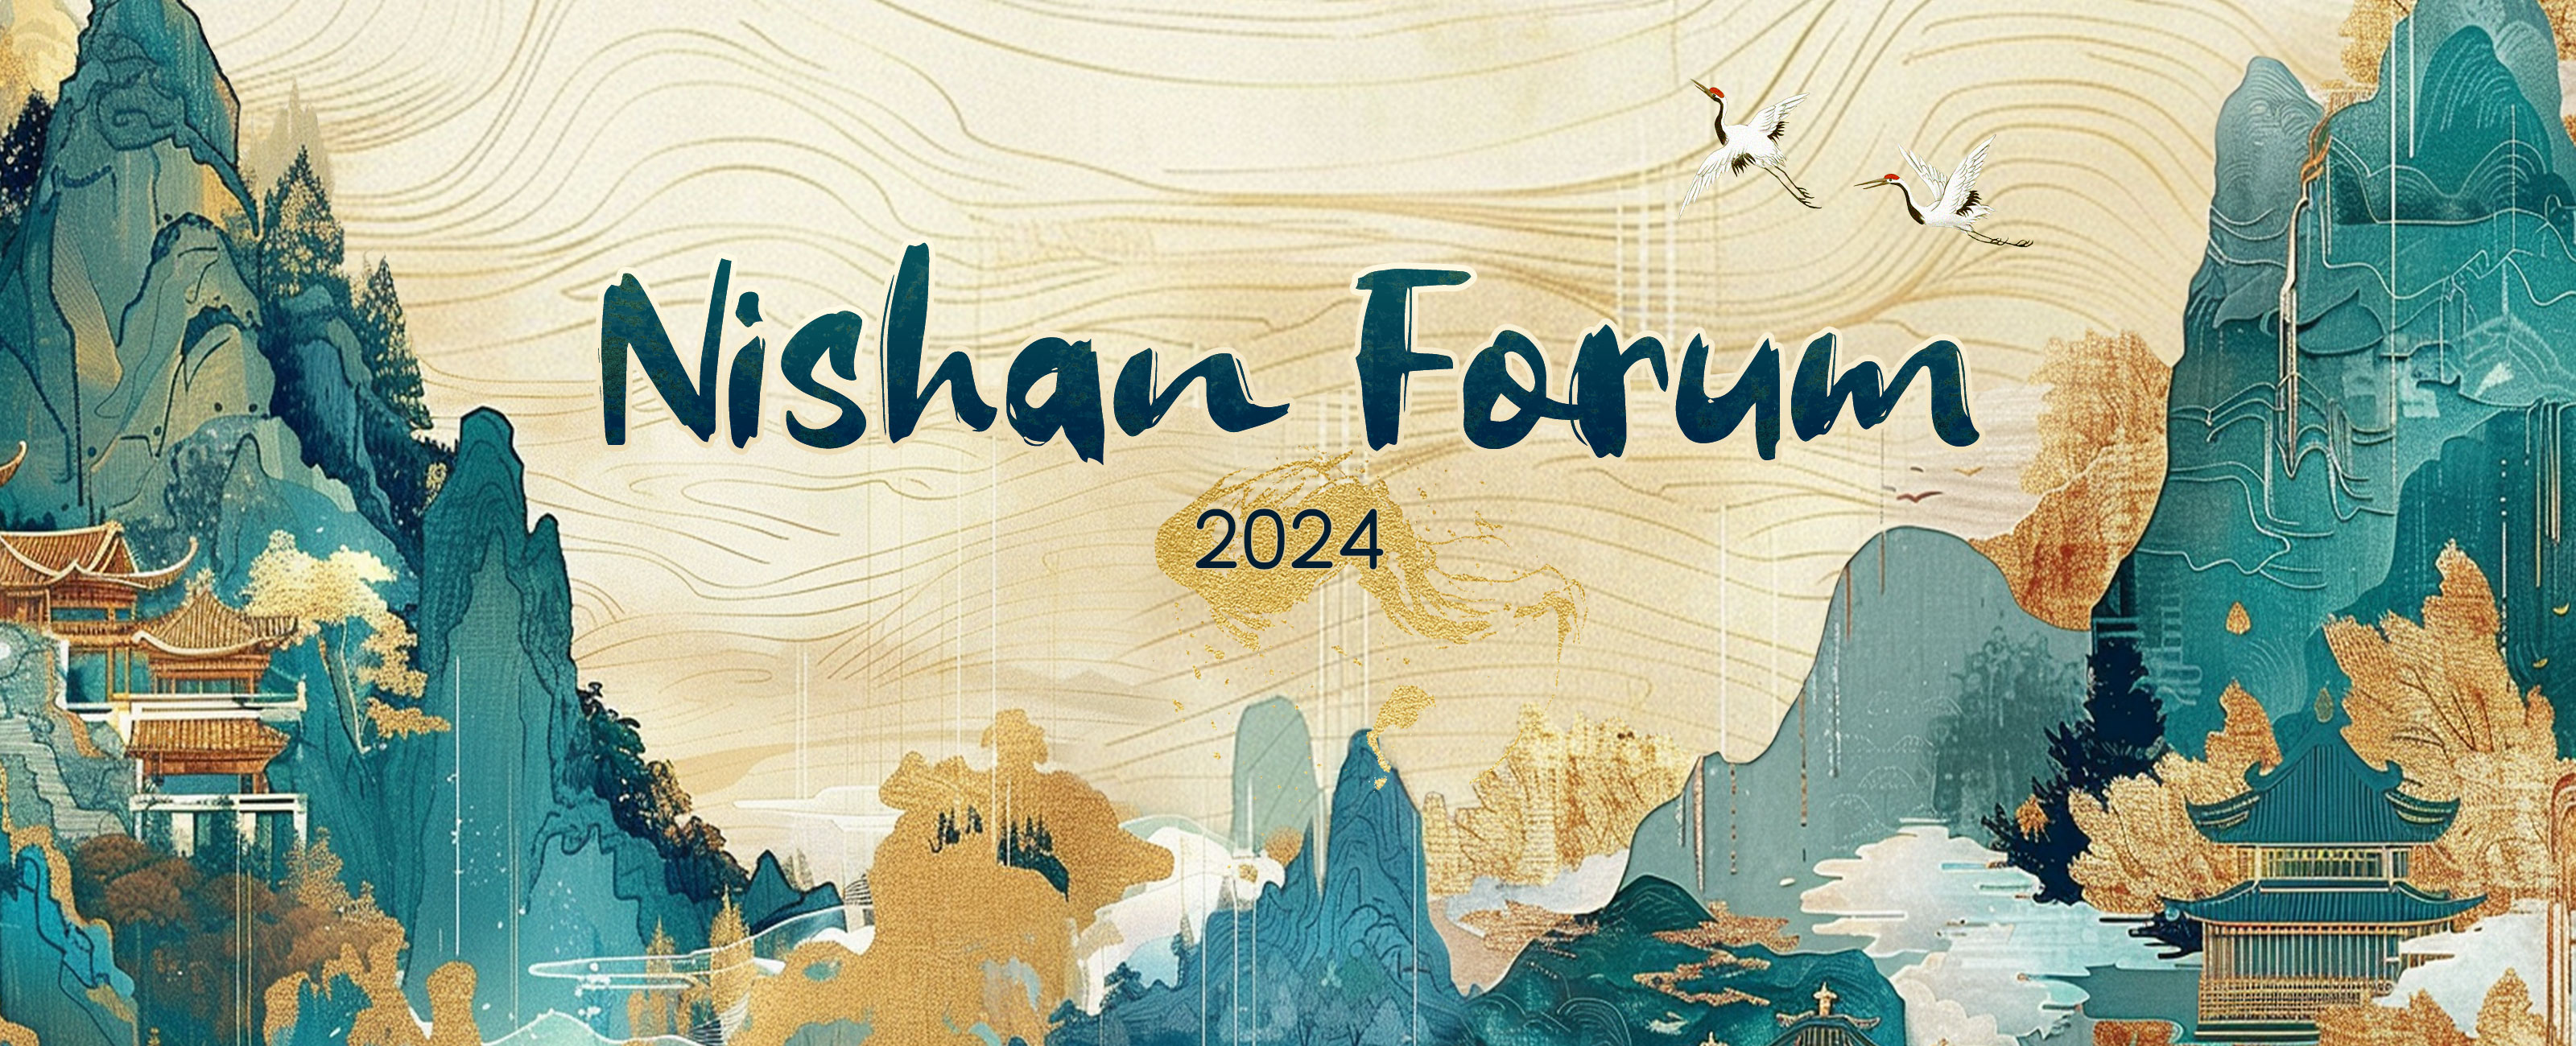 Nishan Forum 2024